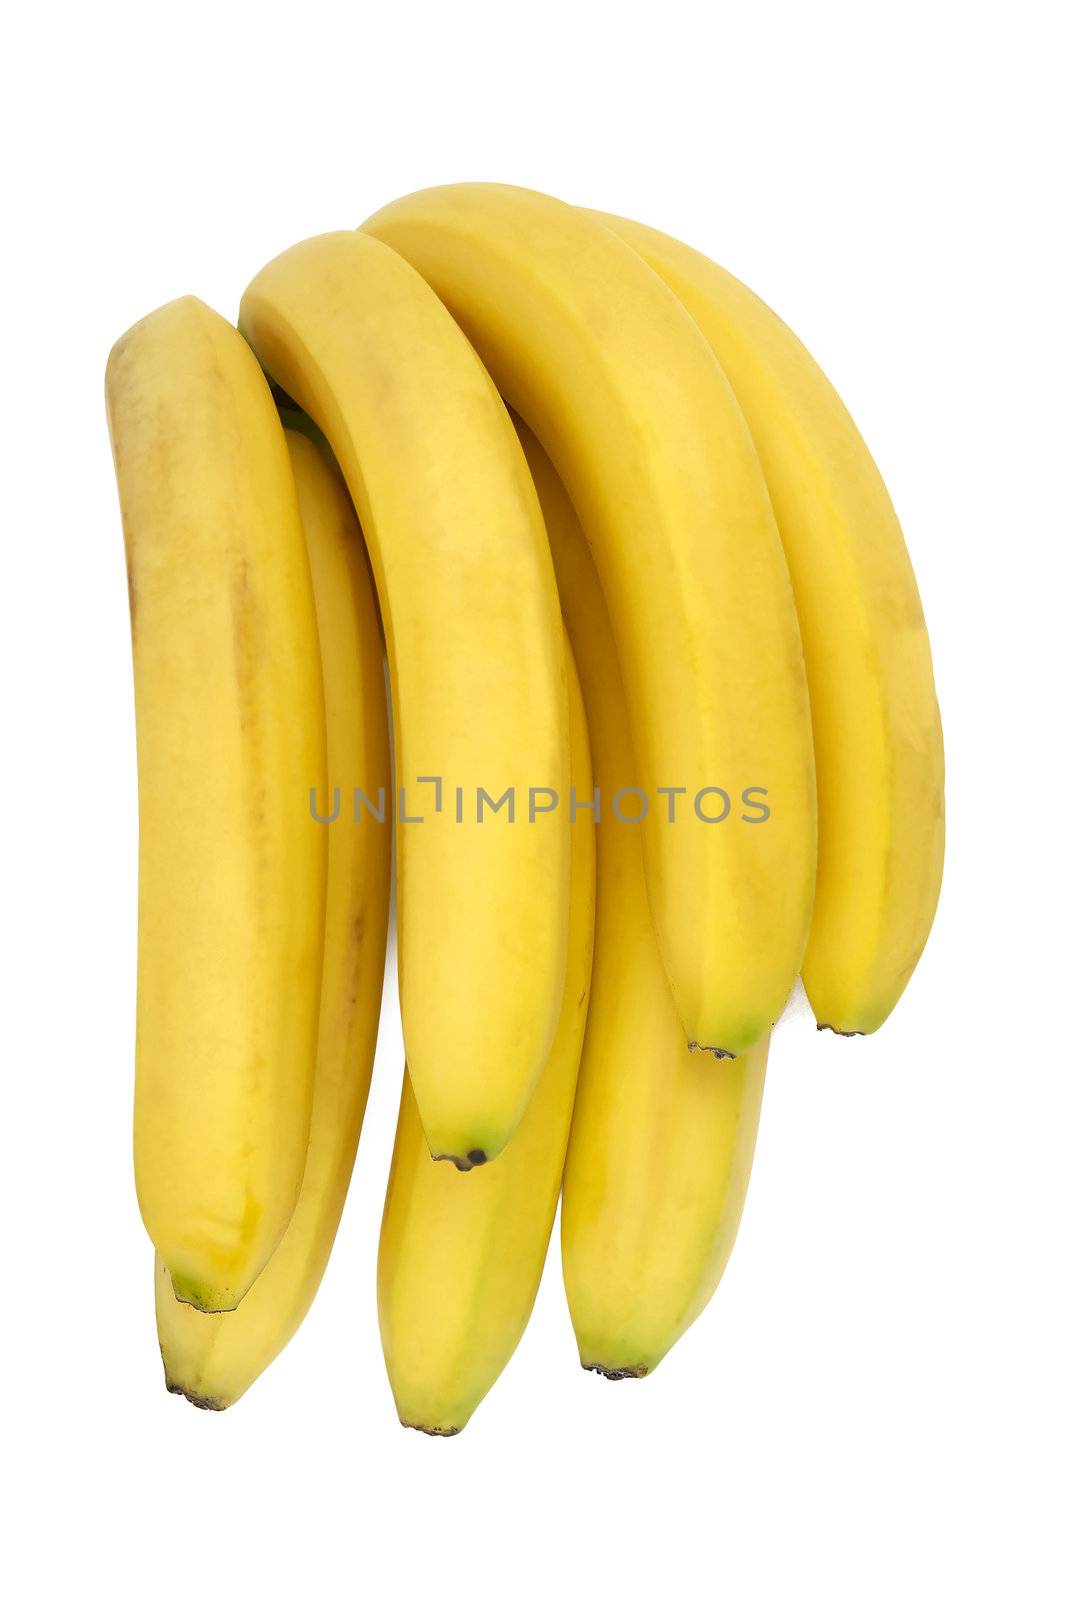 Group of banana isolated on white